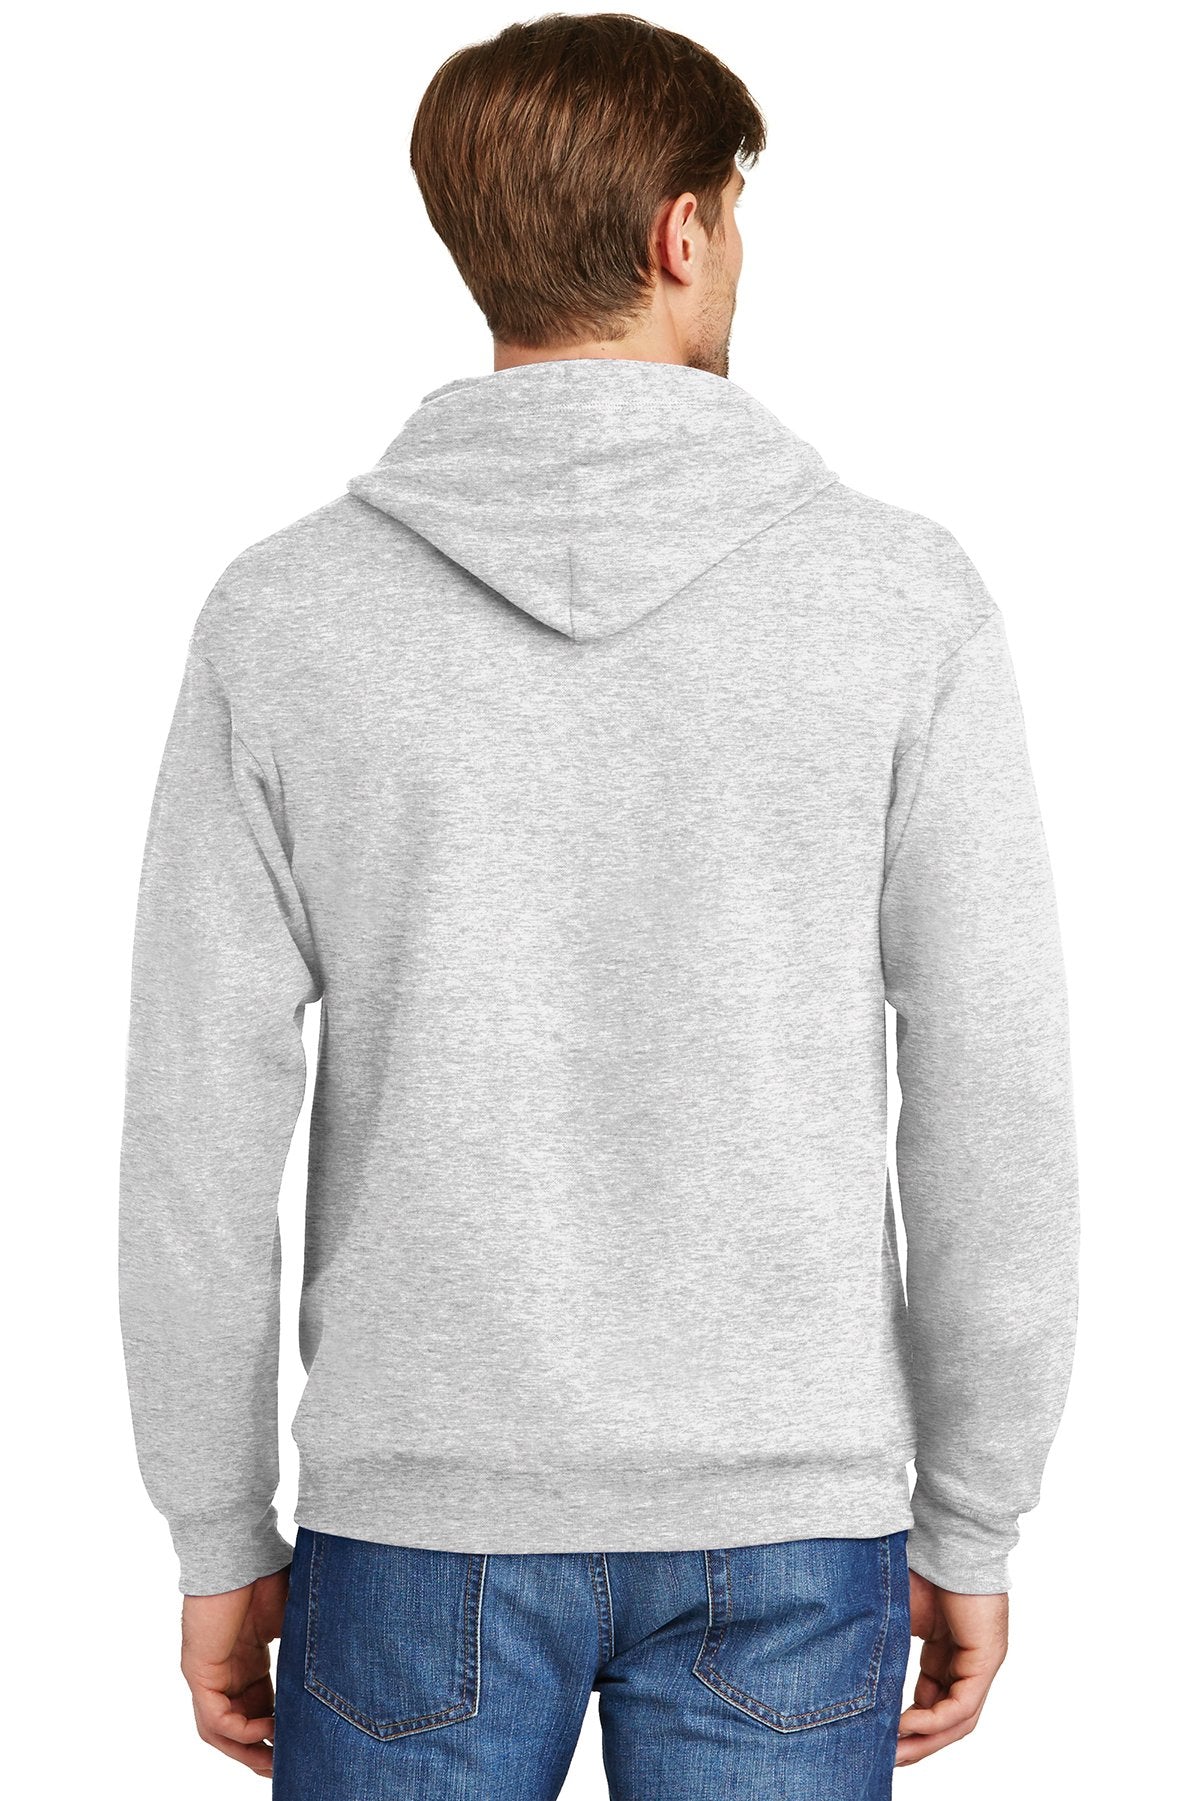 Hanes Ecosmart Full Zip Hooded Sweatshirt P180 Ash